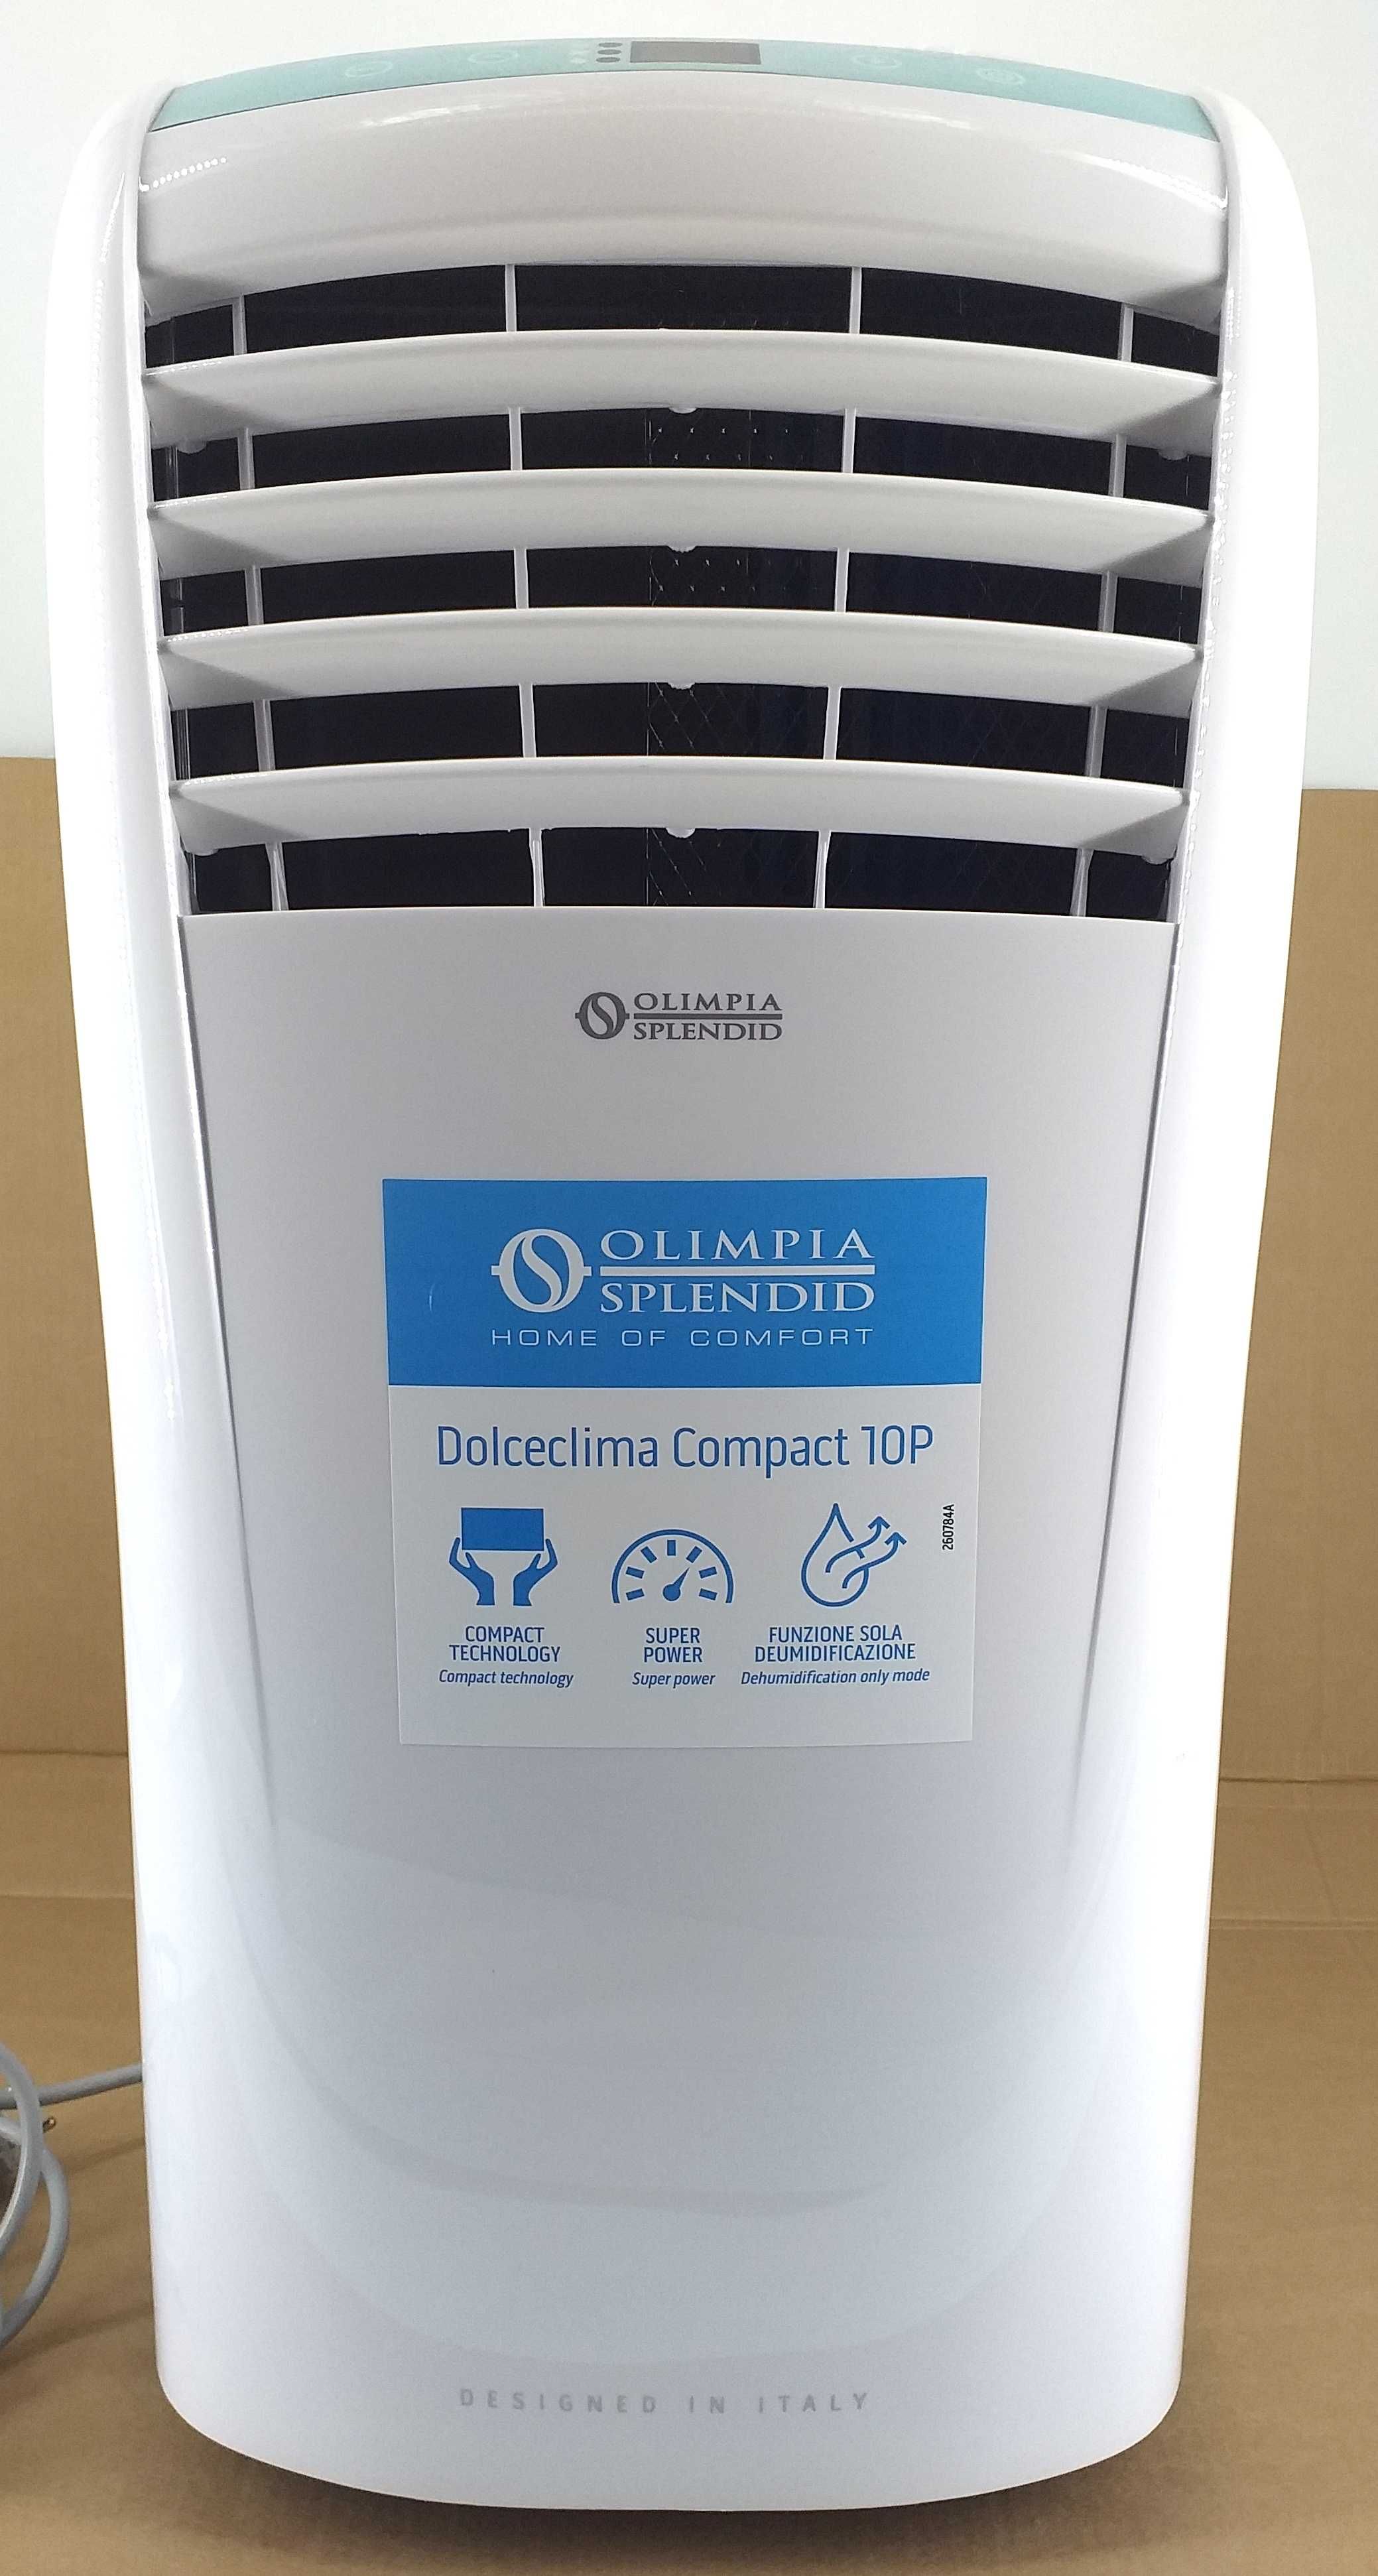 Klimatyzator OLIMPIA SPLENDID Dolceclima Compact 10P, 10000 BTU 2.6 kW